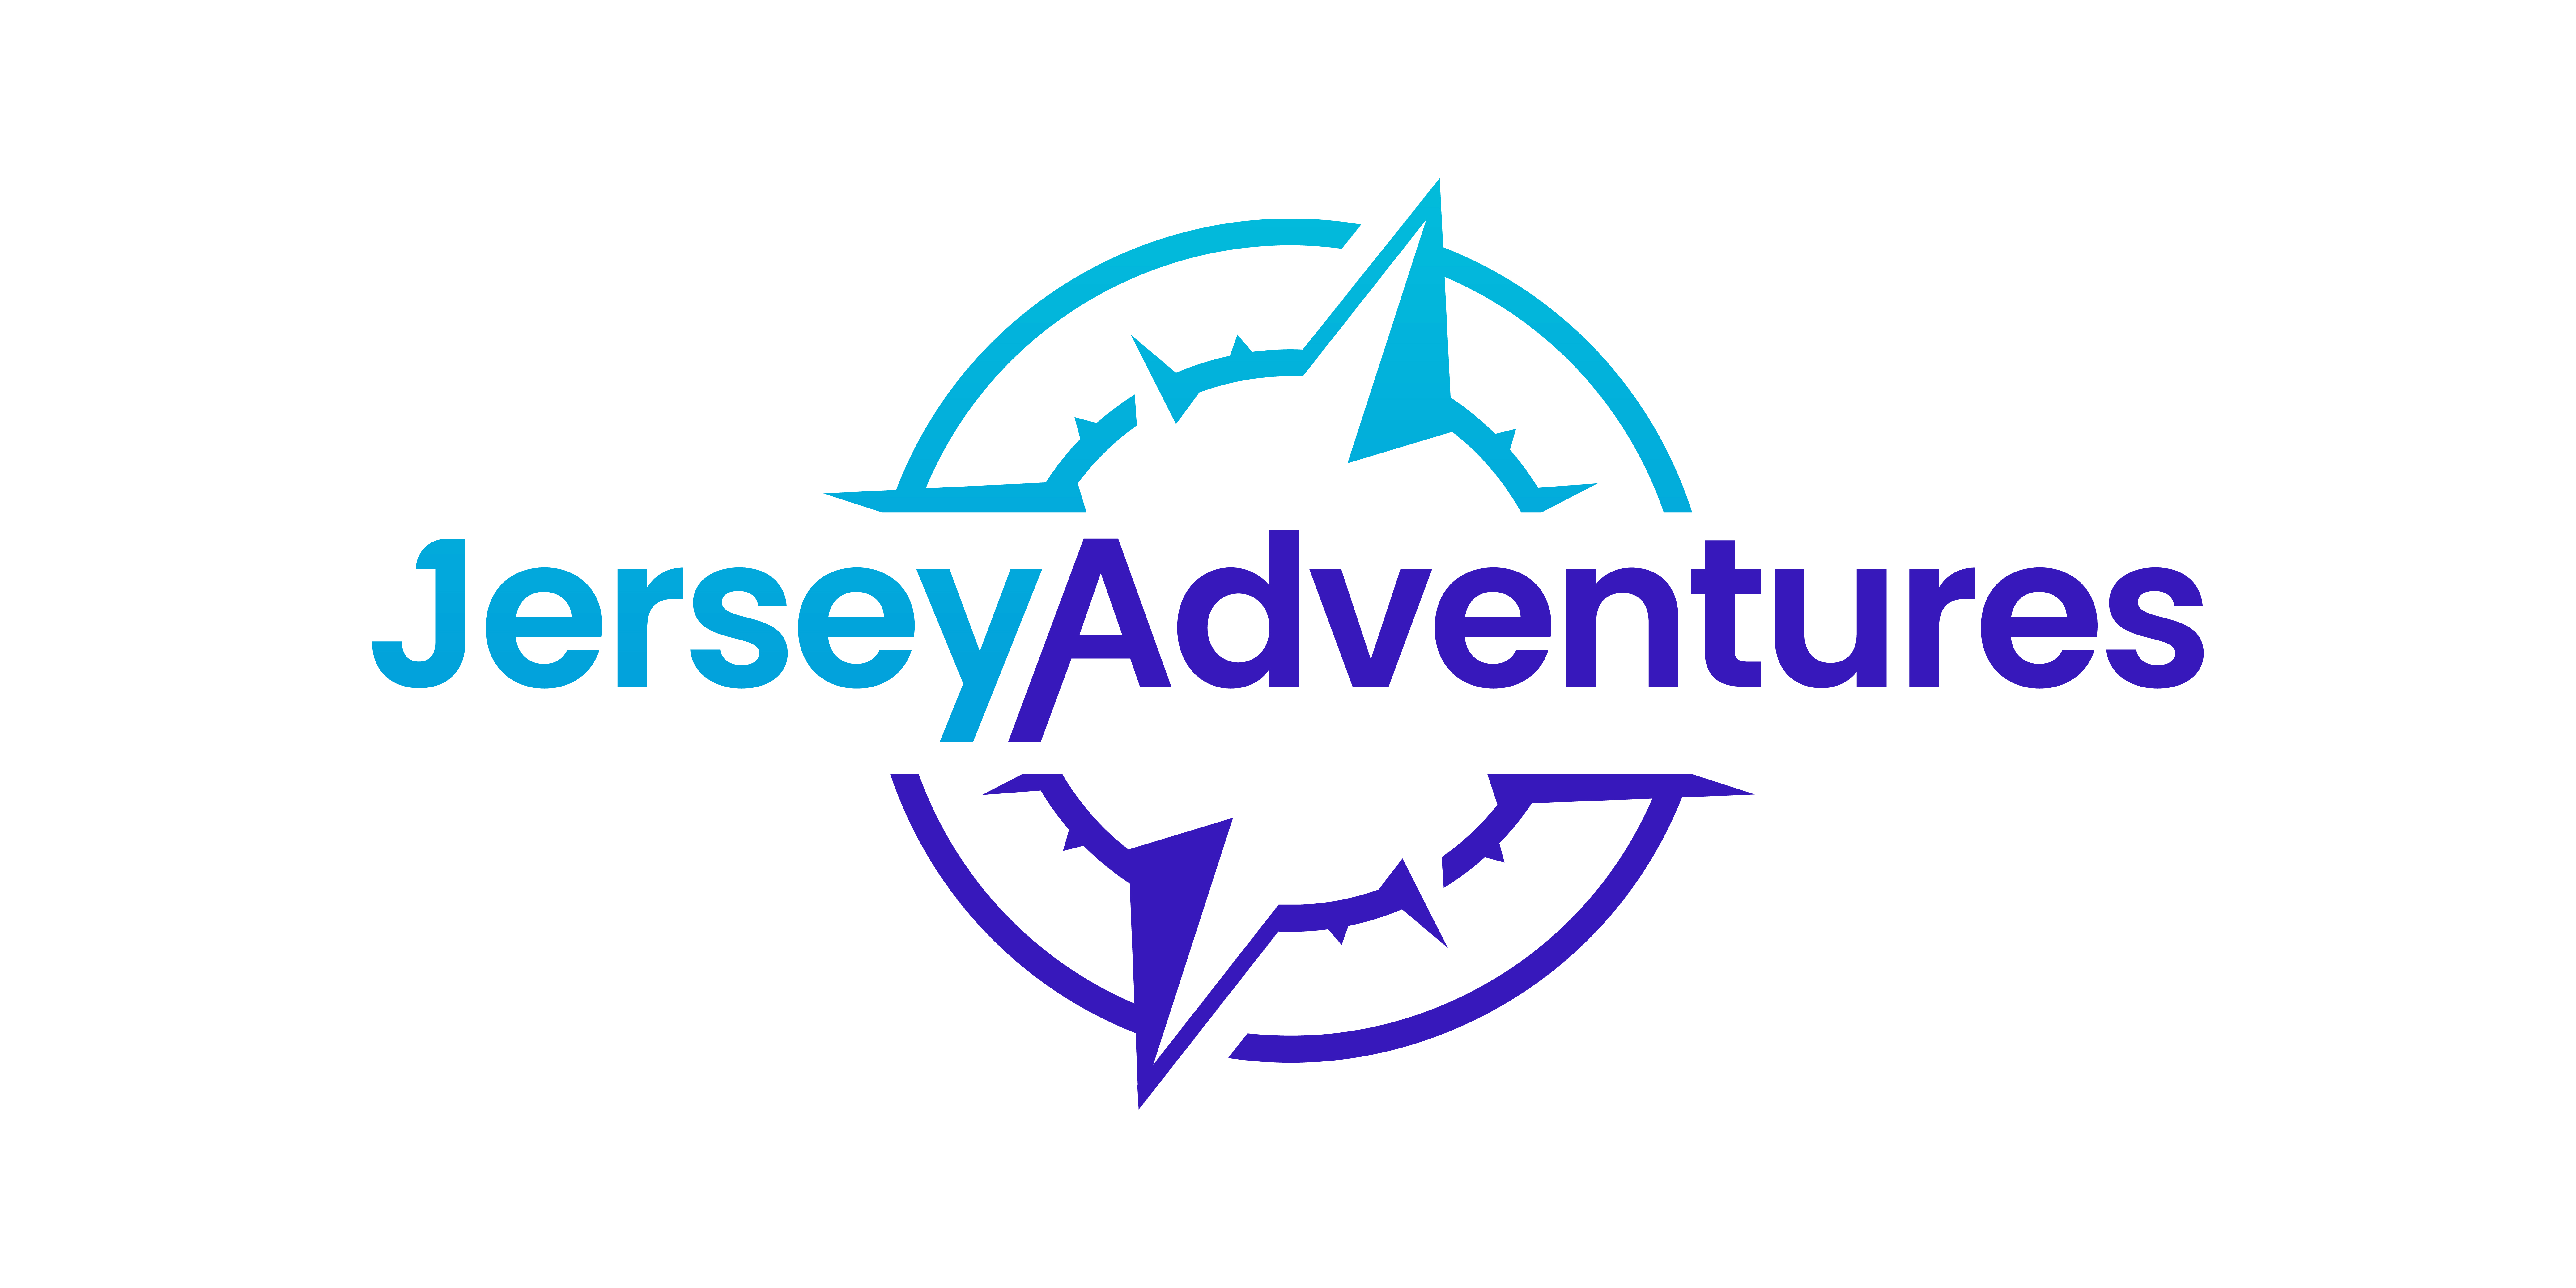 iLuxury Awards - Jersey Adventures